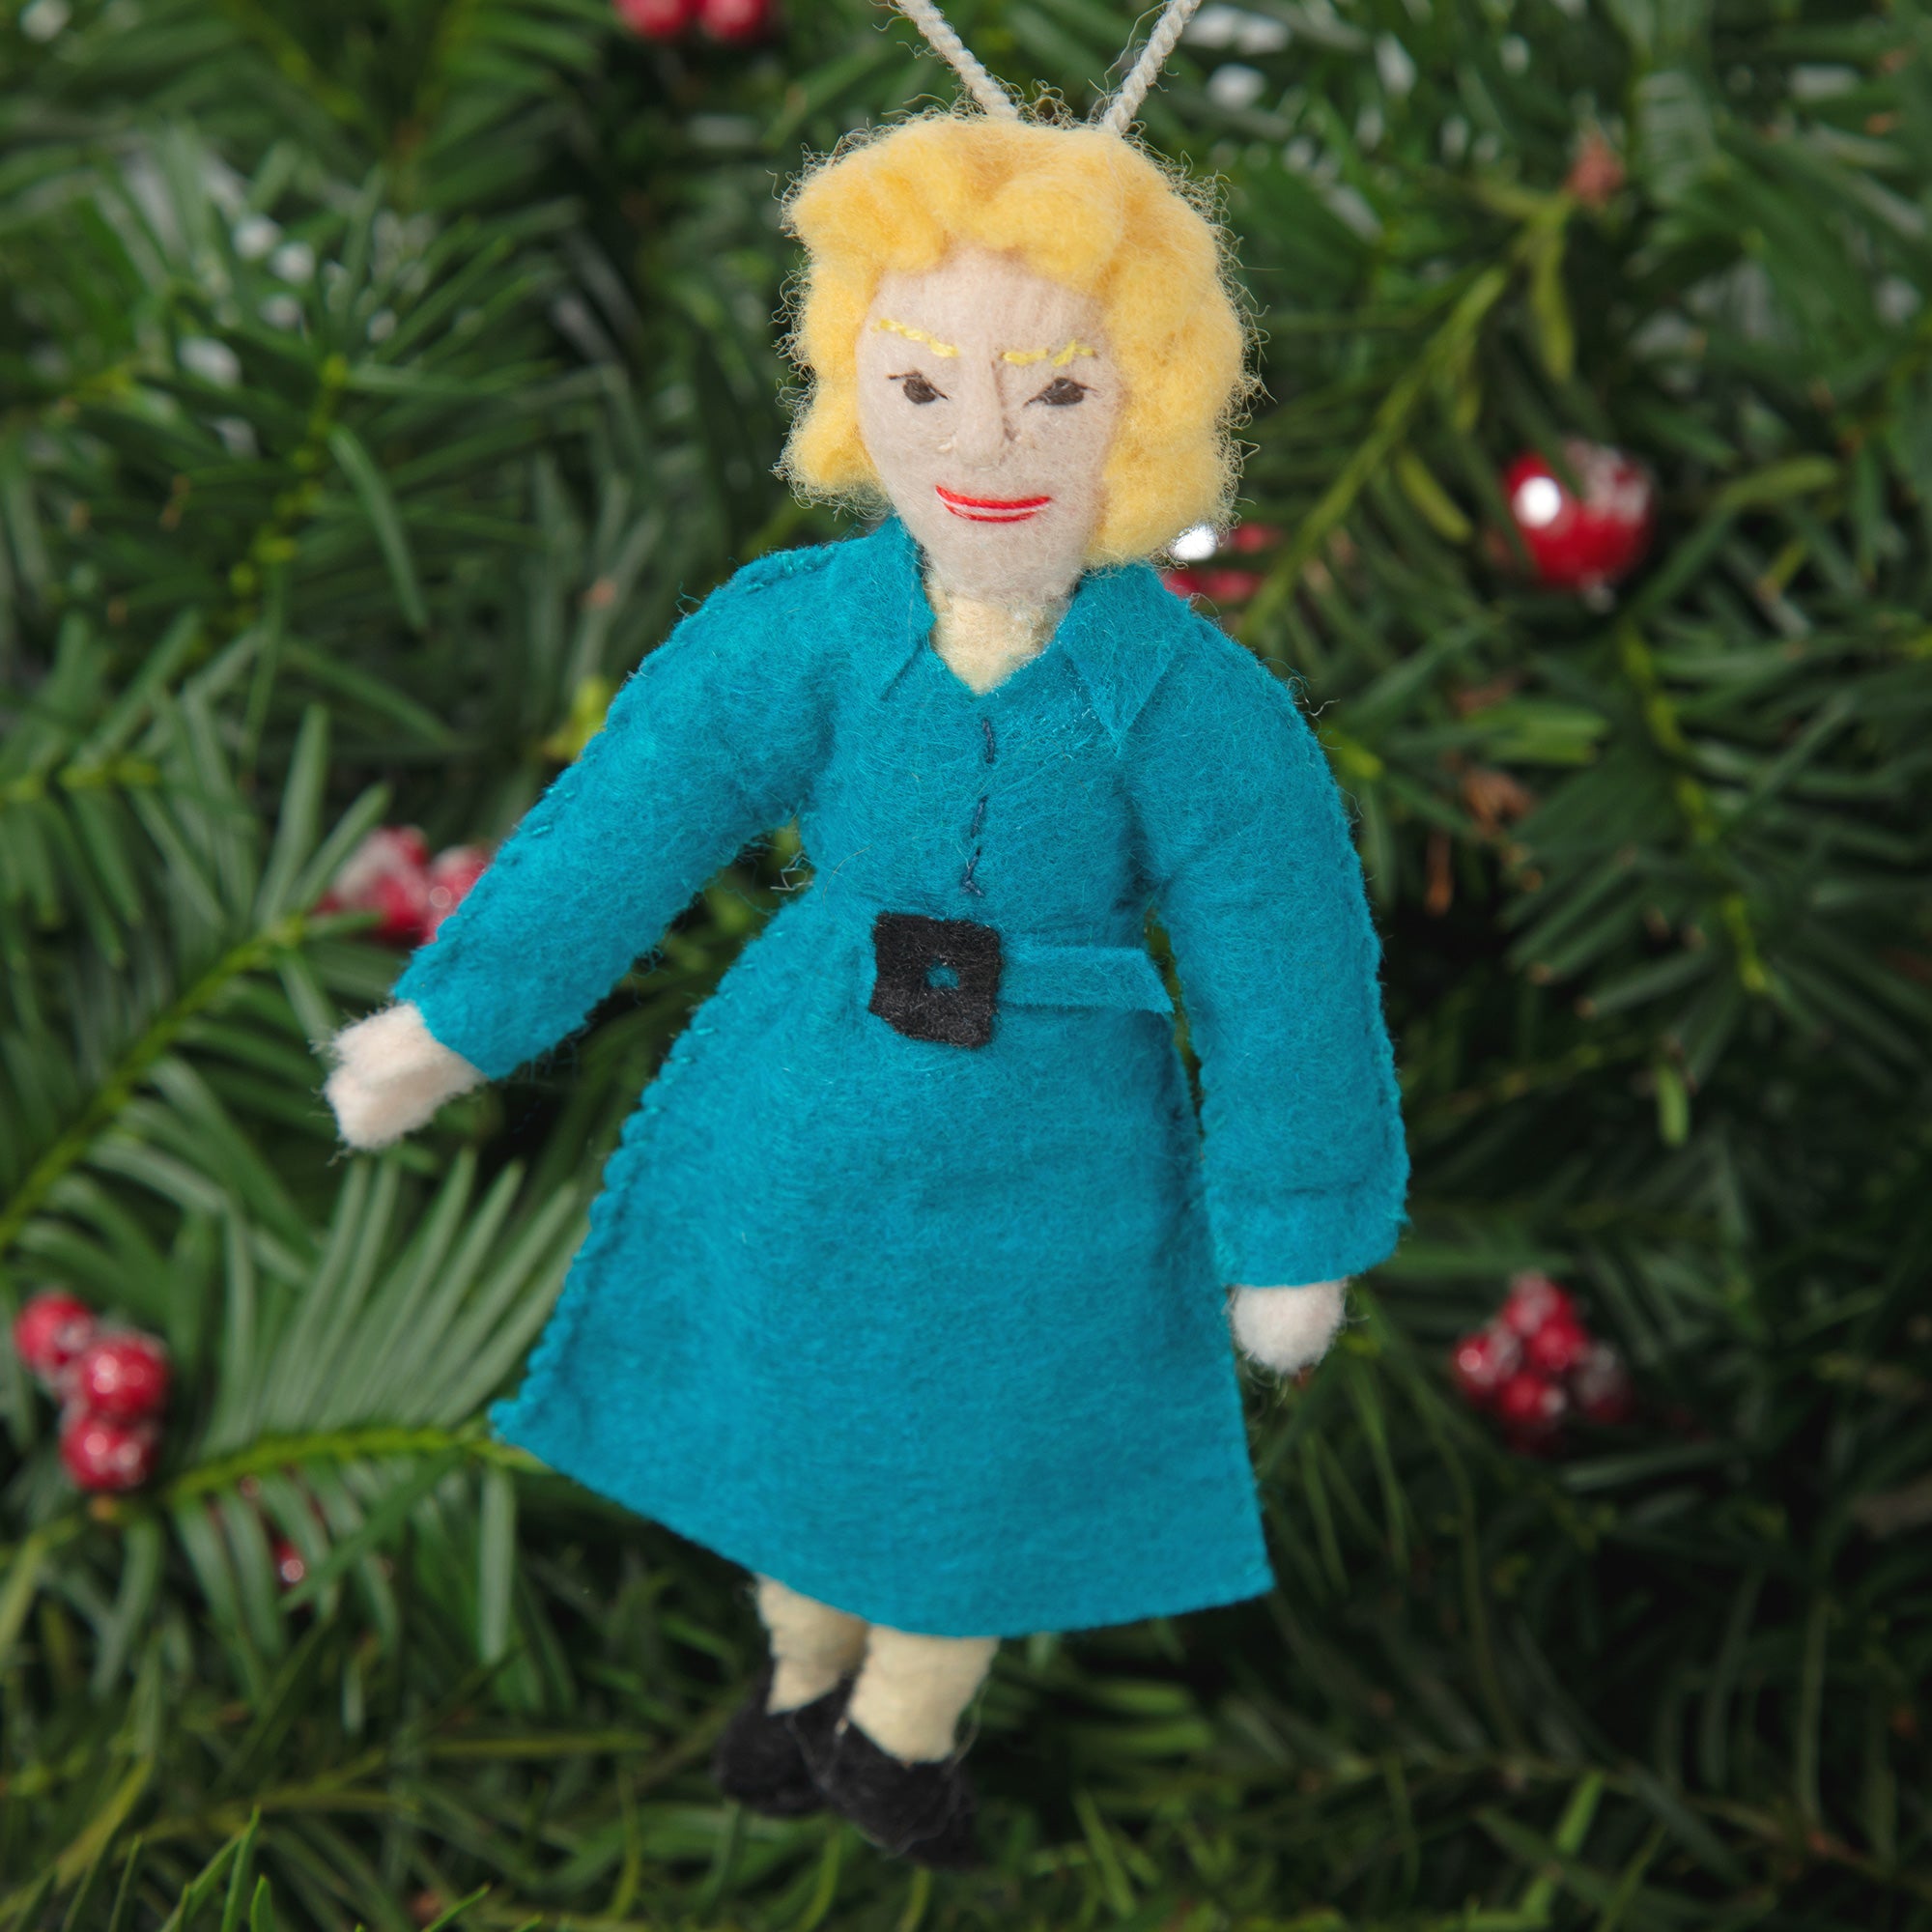 Handmade Figure Ornament - Betty White